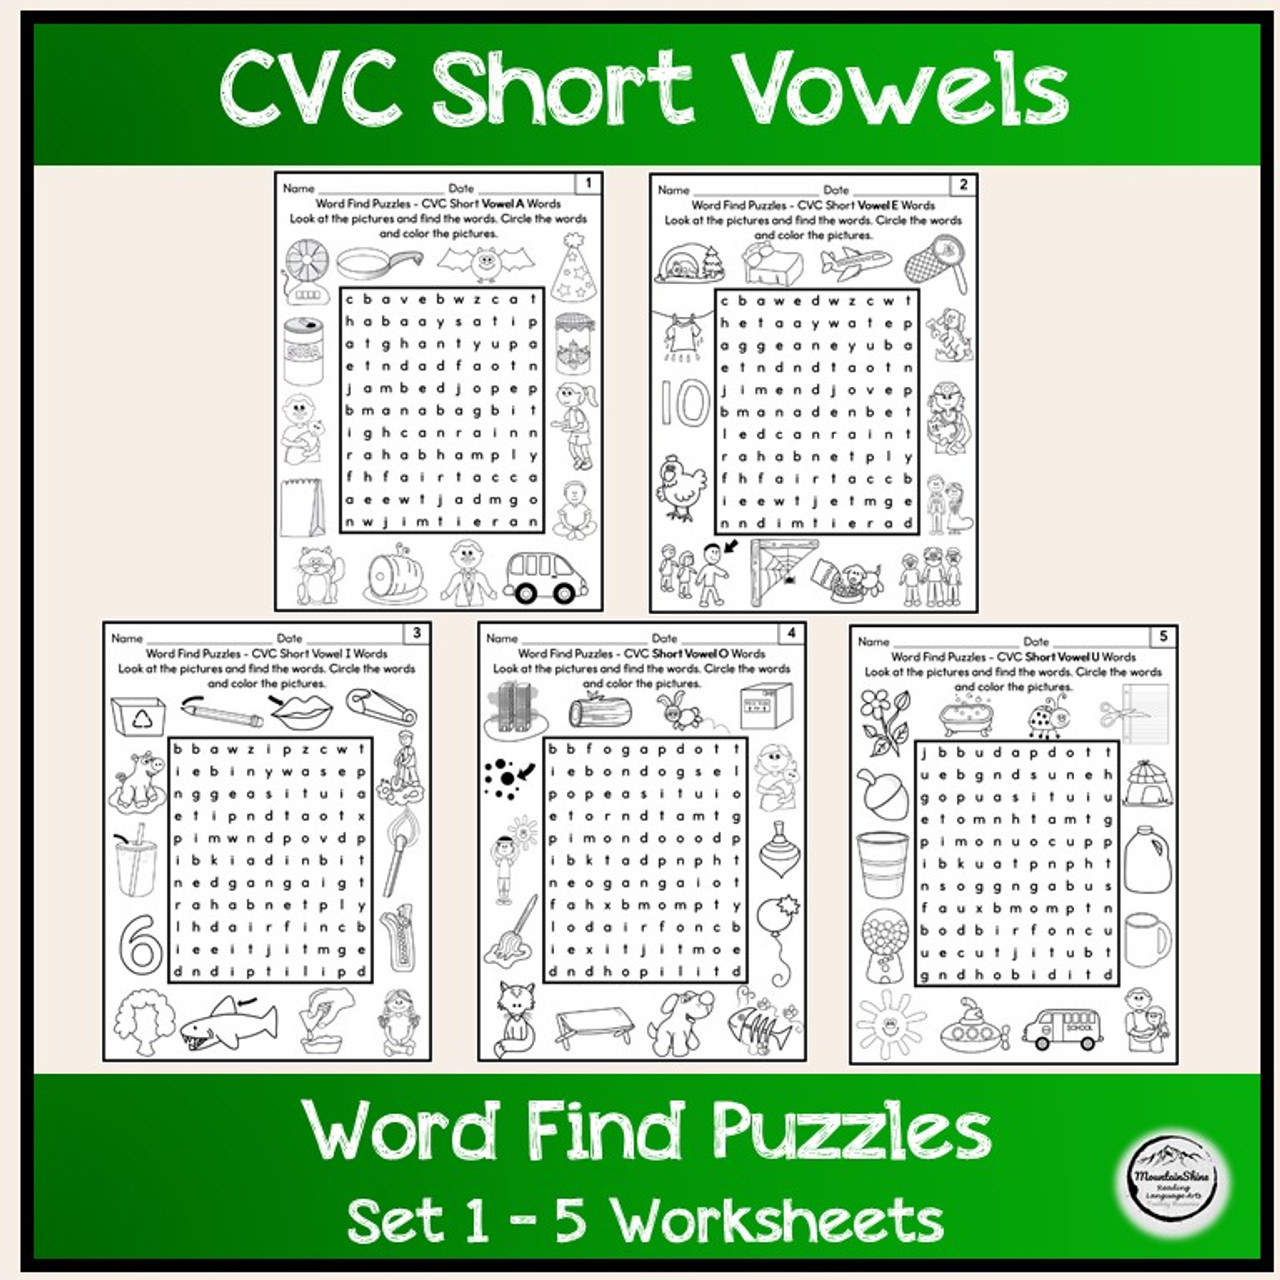 Word Find Puzzles CVC Short Vowel 